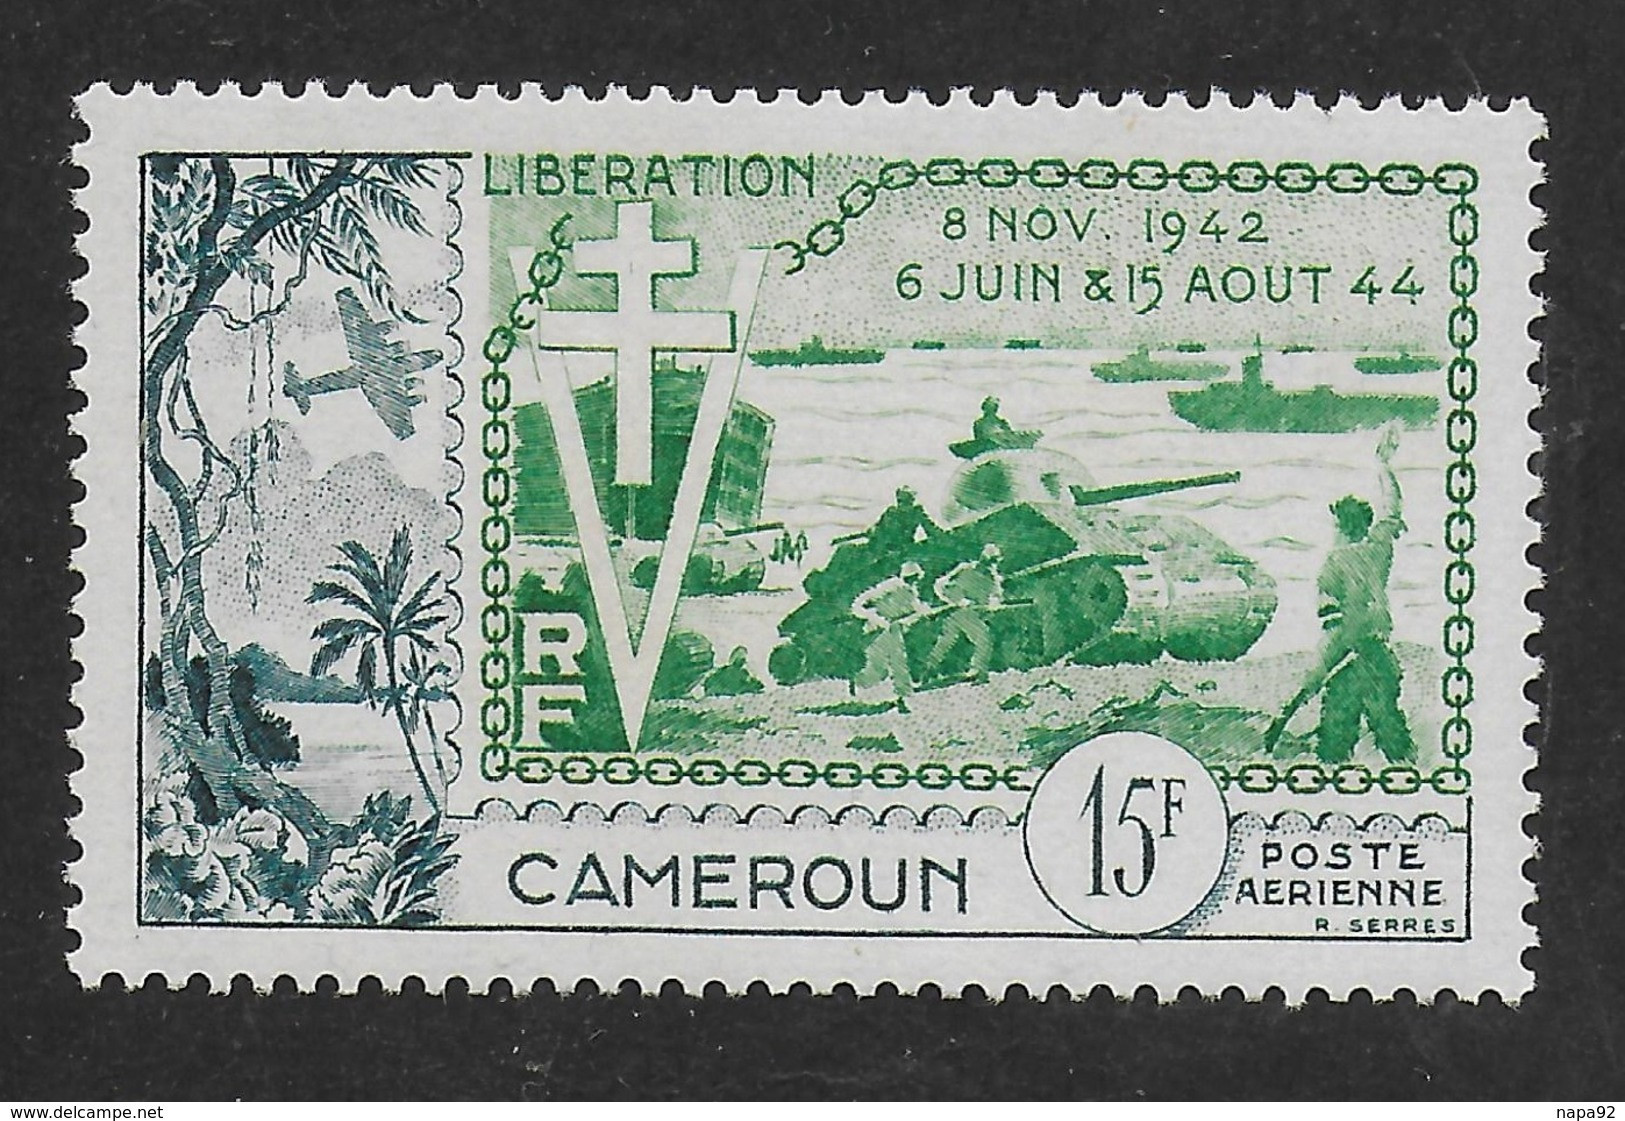 CAMEROUN 1954 - YT PA 44** - Airmail